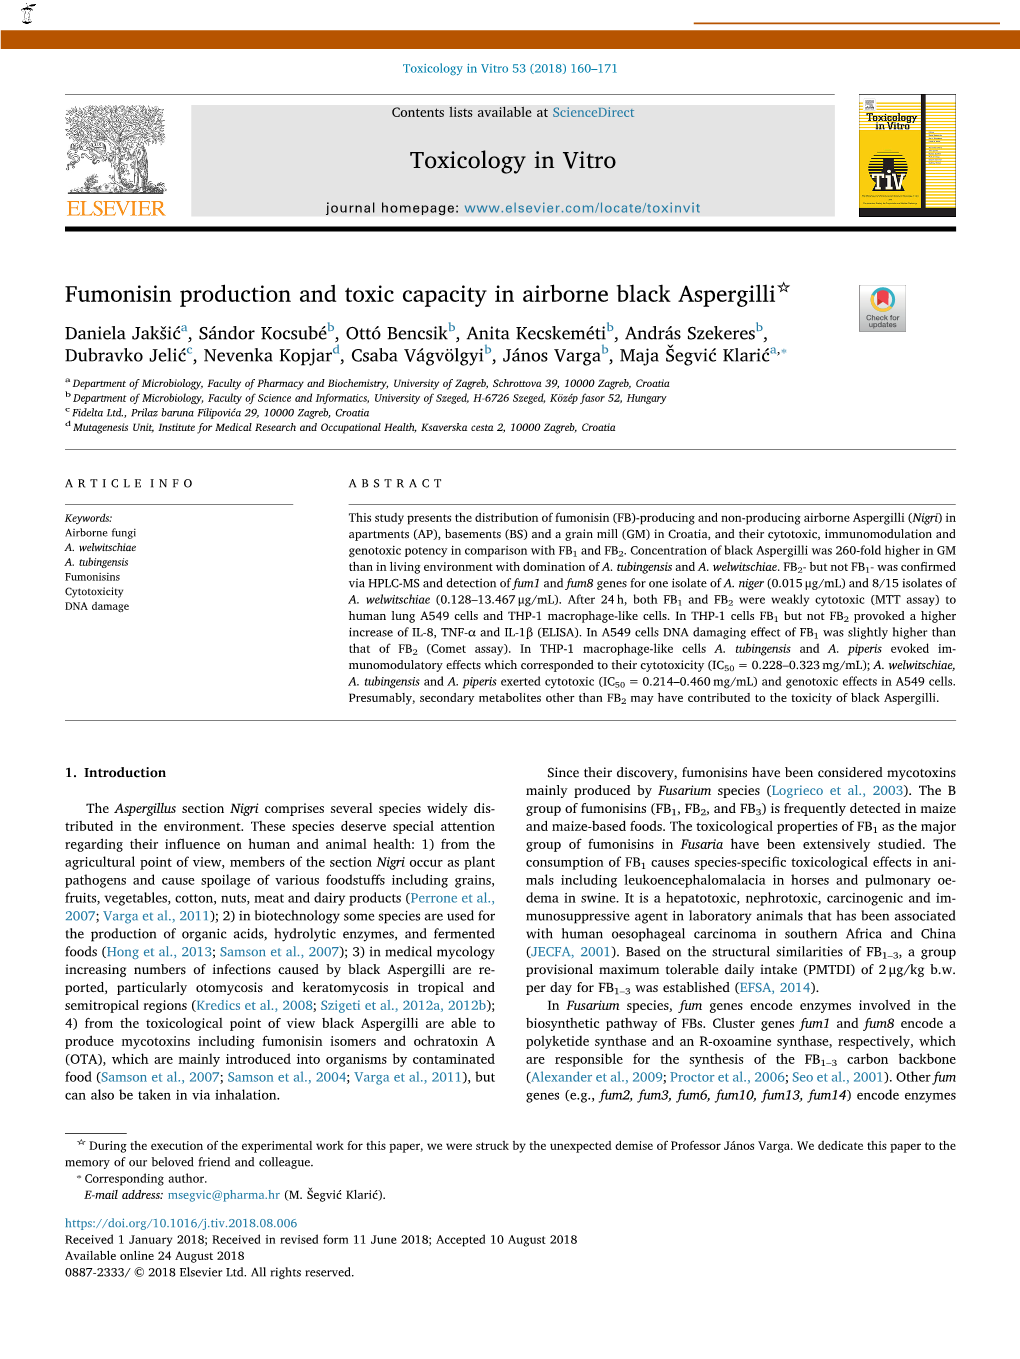 Fumonisin Production and Toxic Capacity in Airborne Black Aspergilli